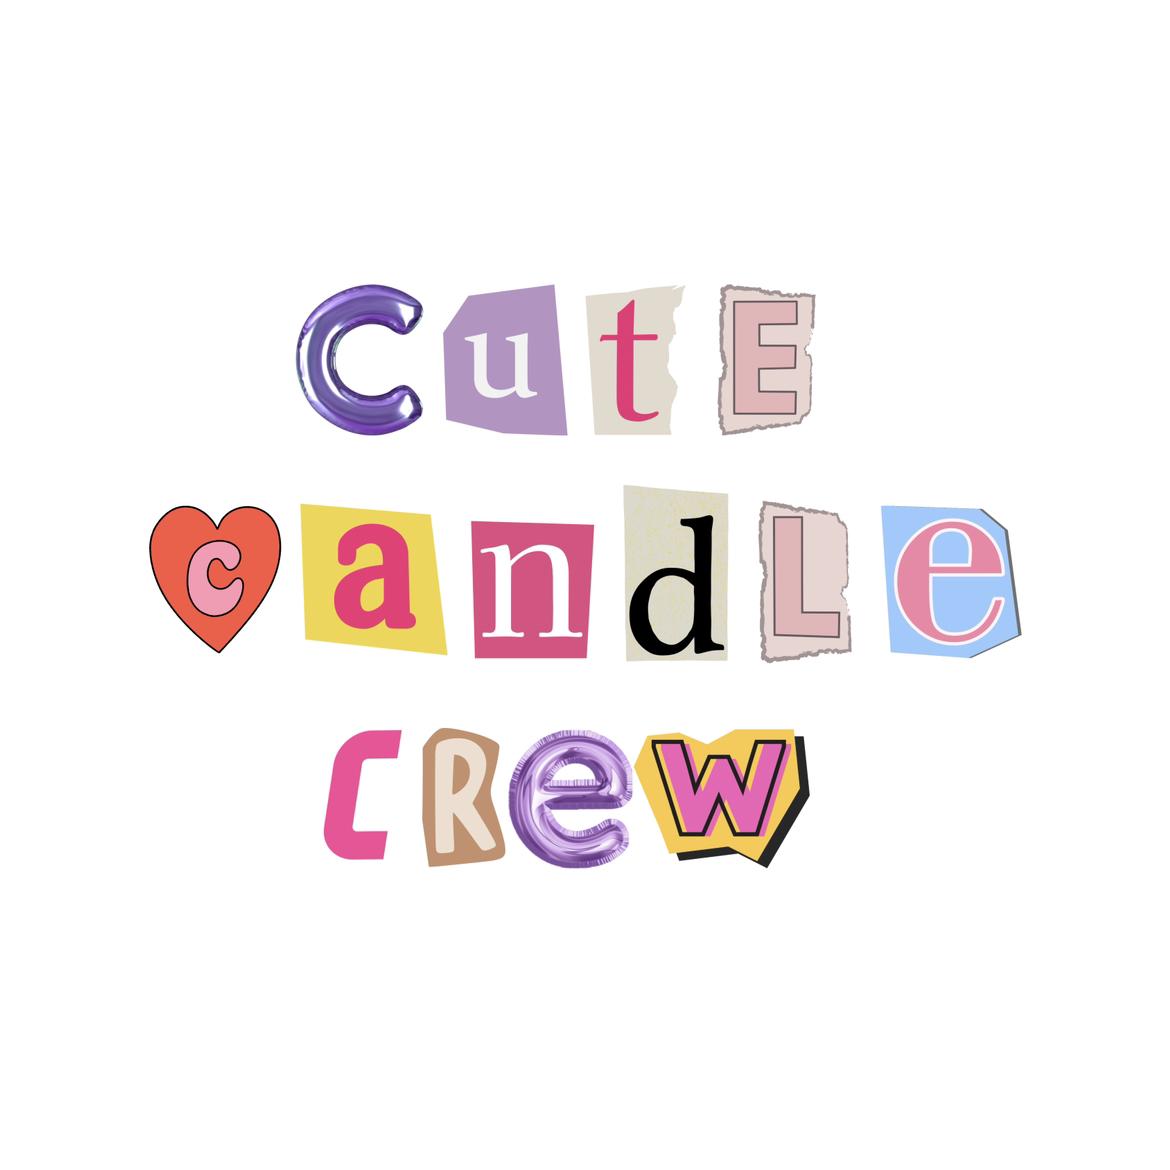 CuteCandleCrew